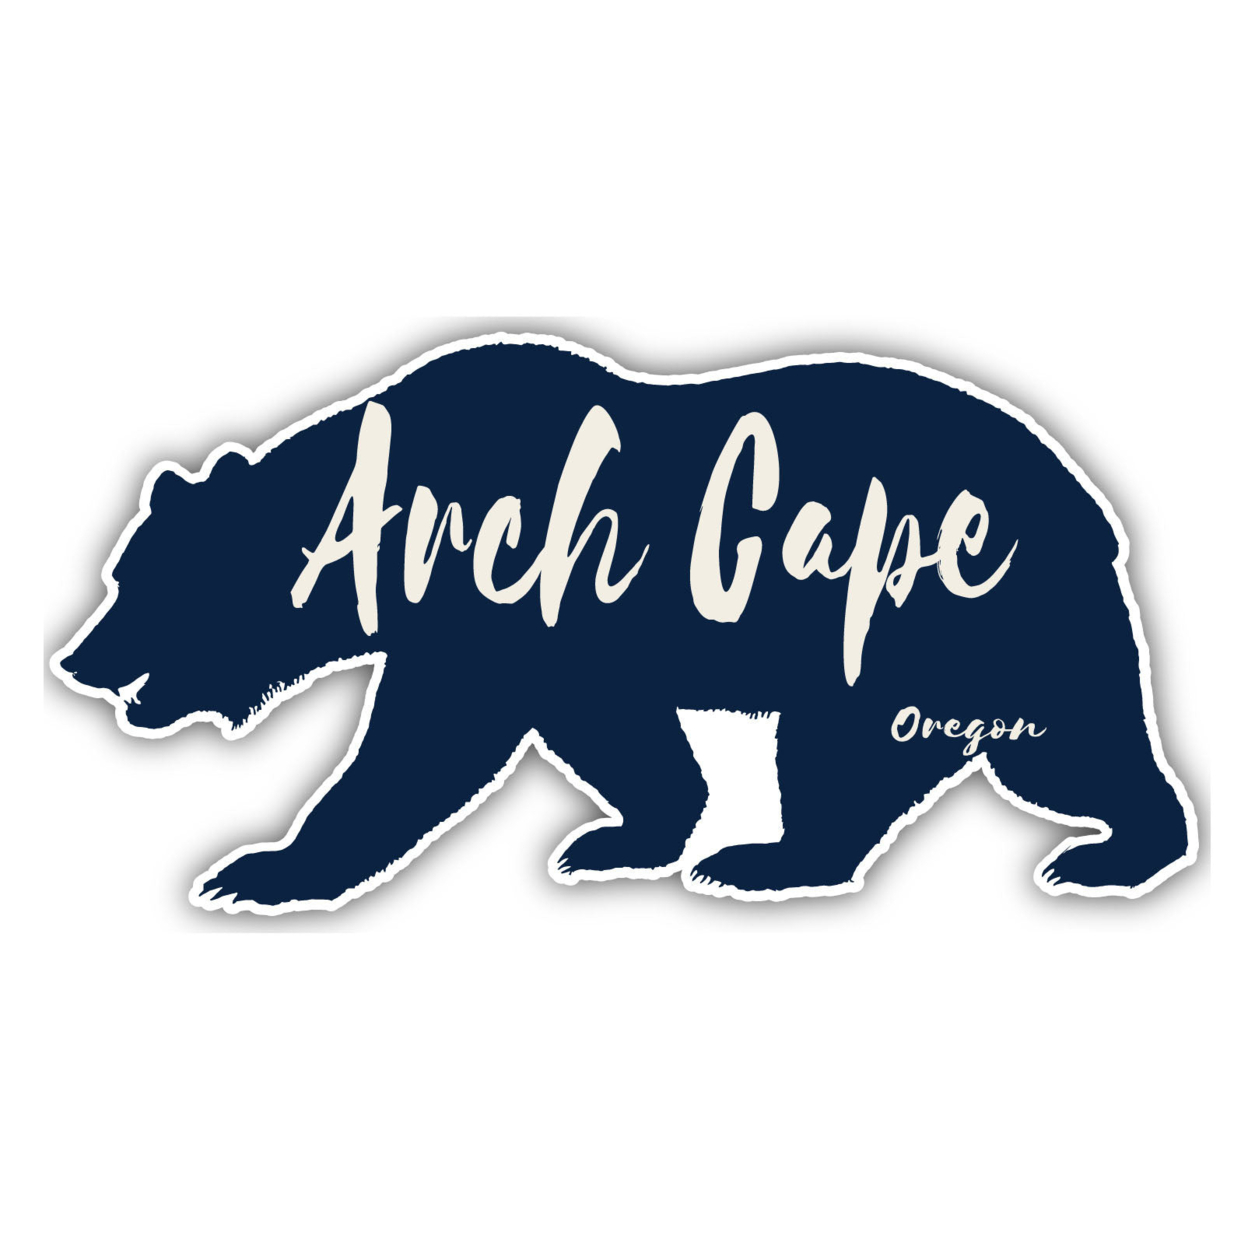 Arch Cape Oregon Souvenir Decorative Stickers (Choose Theme And Size) - 4-Pack, 6-Inch, Bear